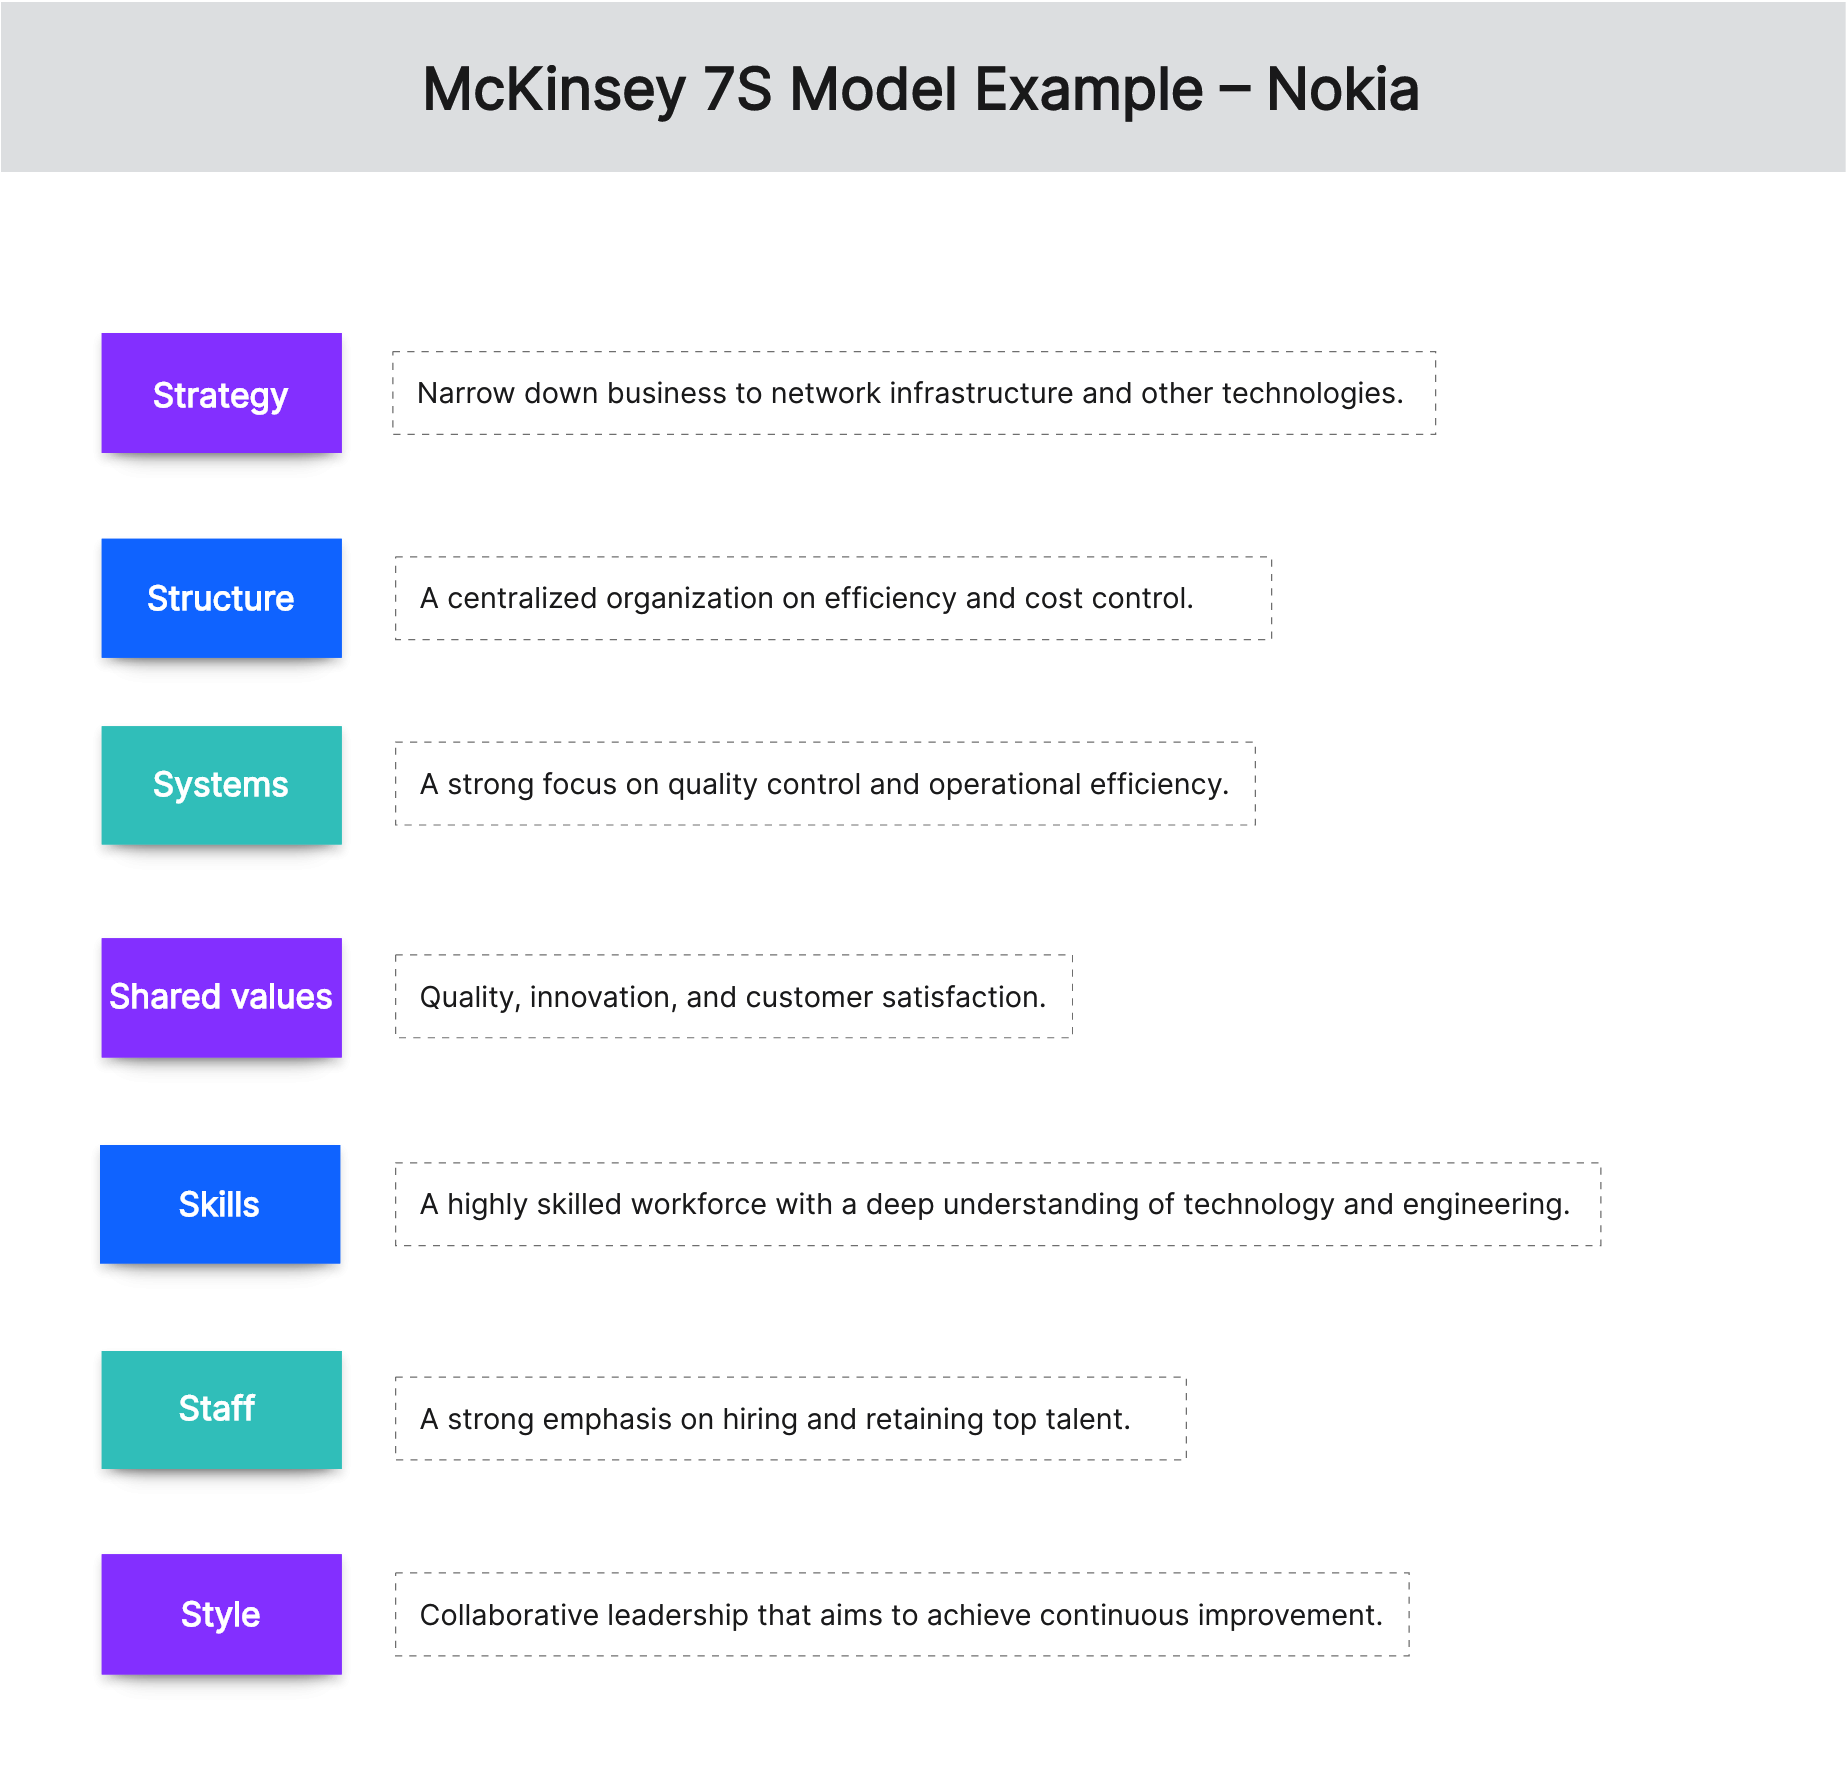 mckinsey-7s-model-example-nokia